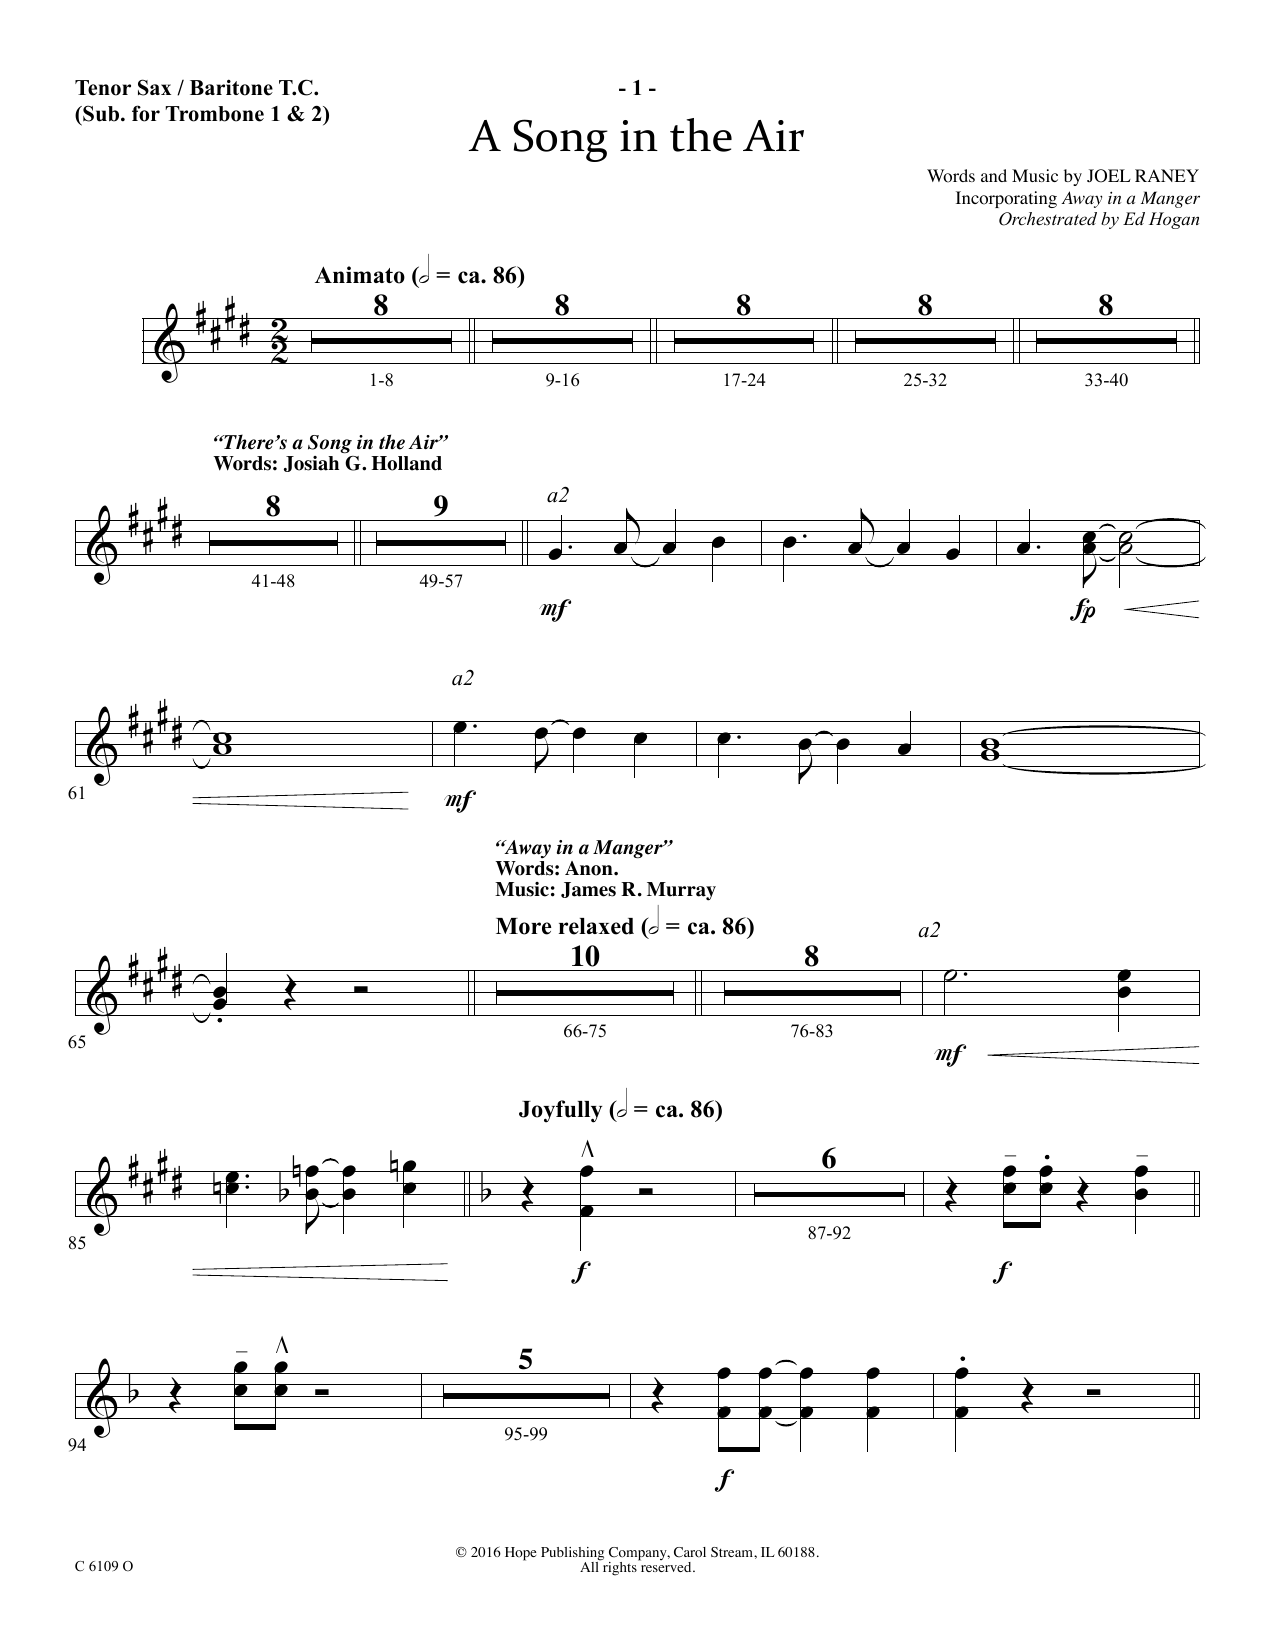 Ed Hogan A Song In The Air - Tenor Sax/Baritone TC Sheet Music Notes & Chords for Choir Instrumental Pak - Download or Print PDF